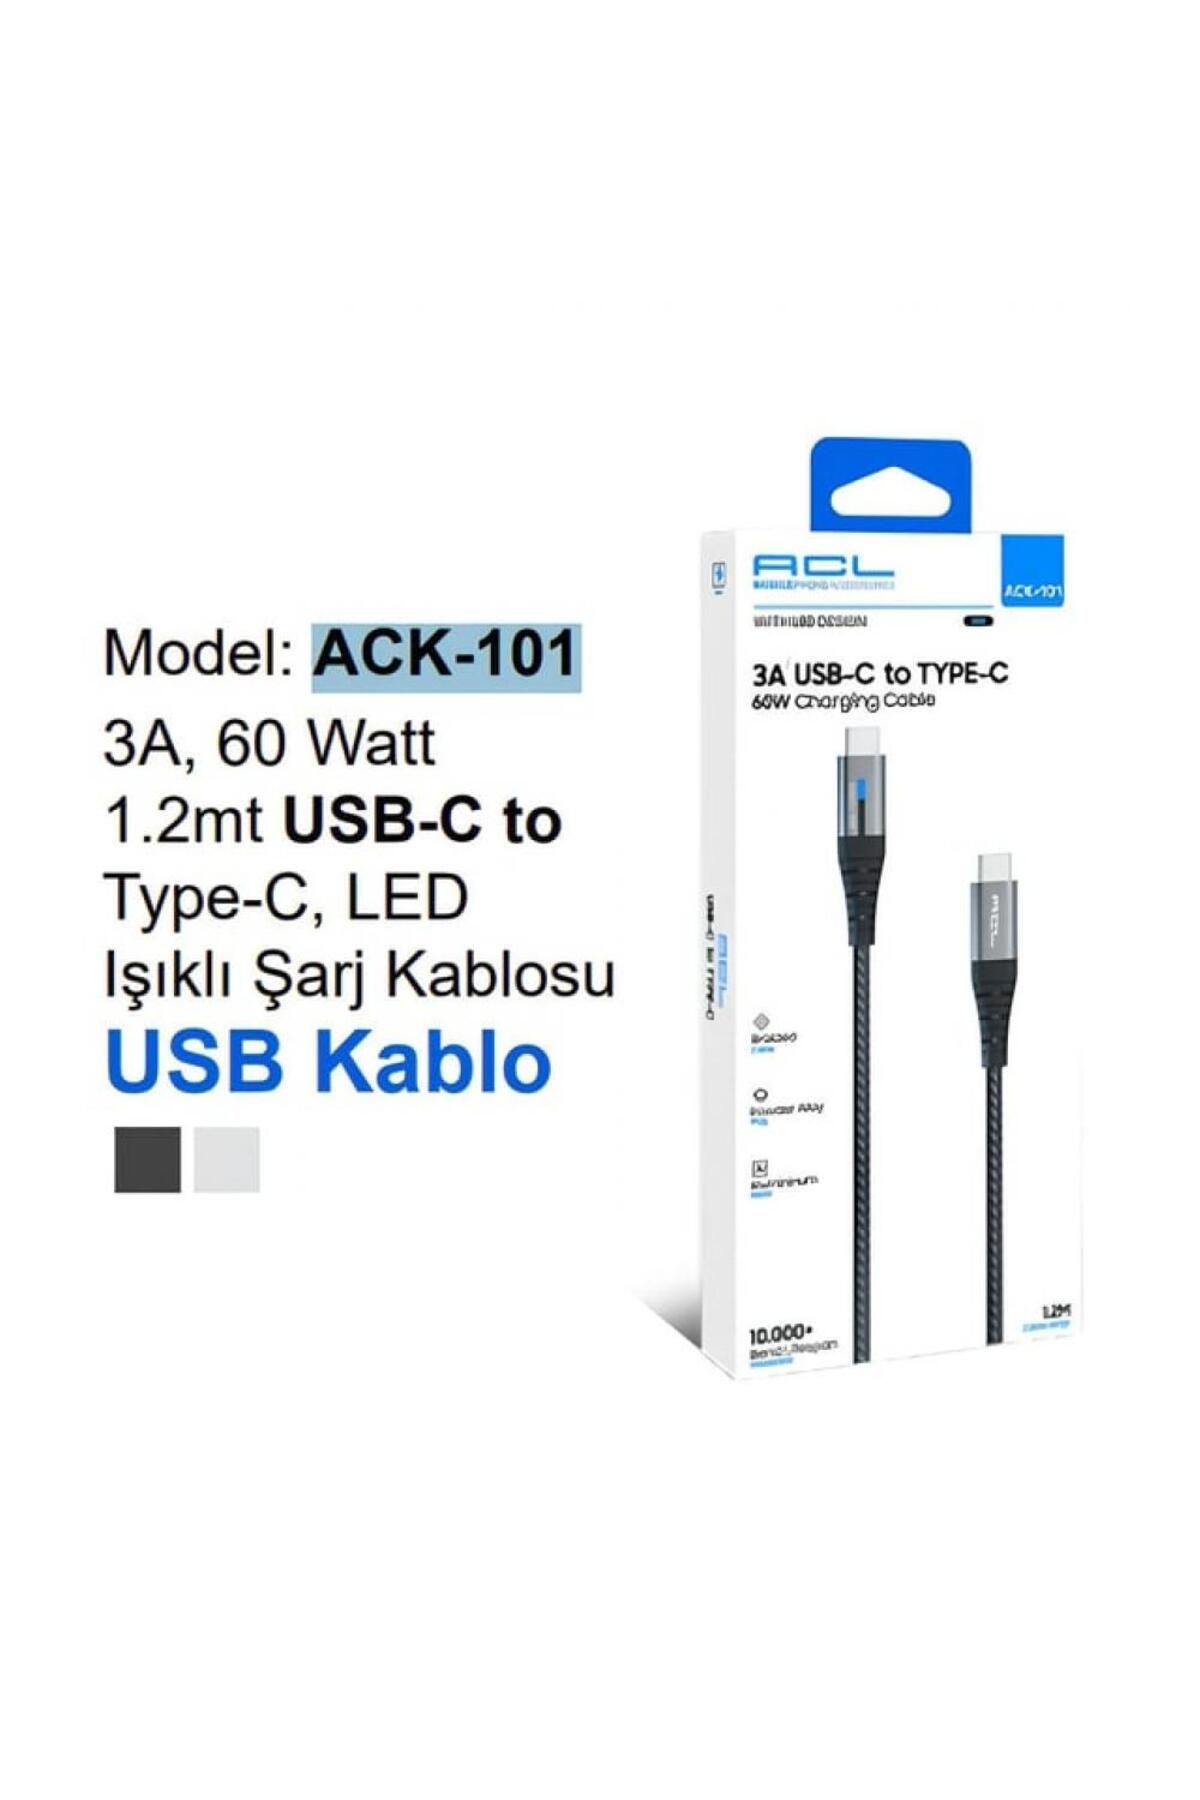 ACL Ack-101 3A, 60 Watt 1.2mt Usb-C to Type-C Led Işıklı Şarj Kablosu Usb Kablo